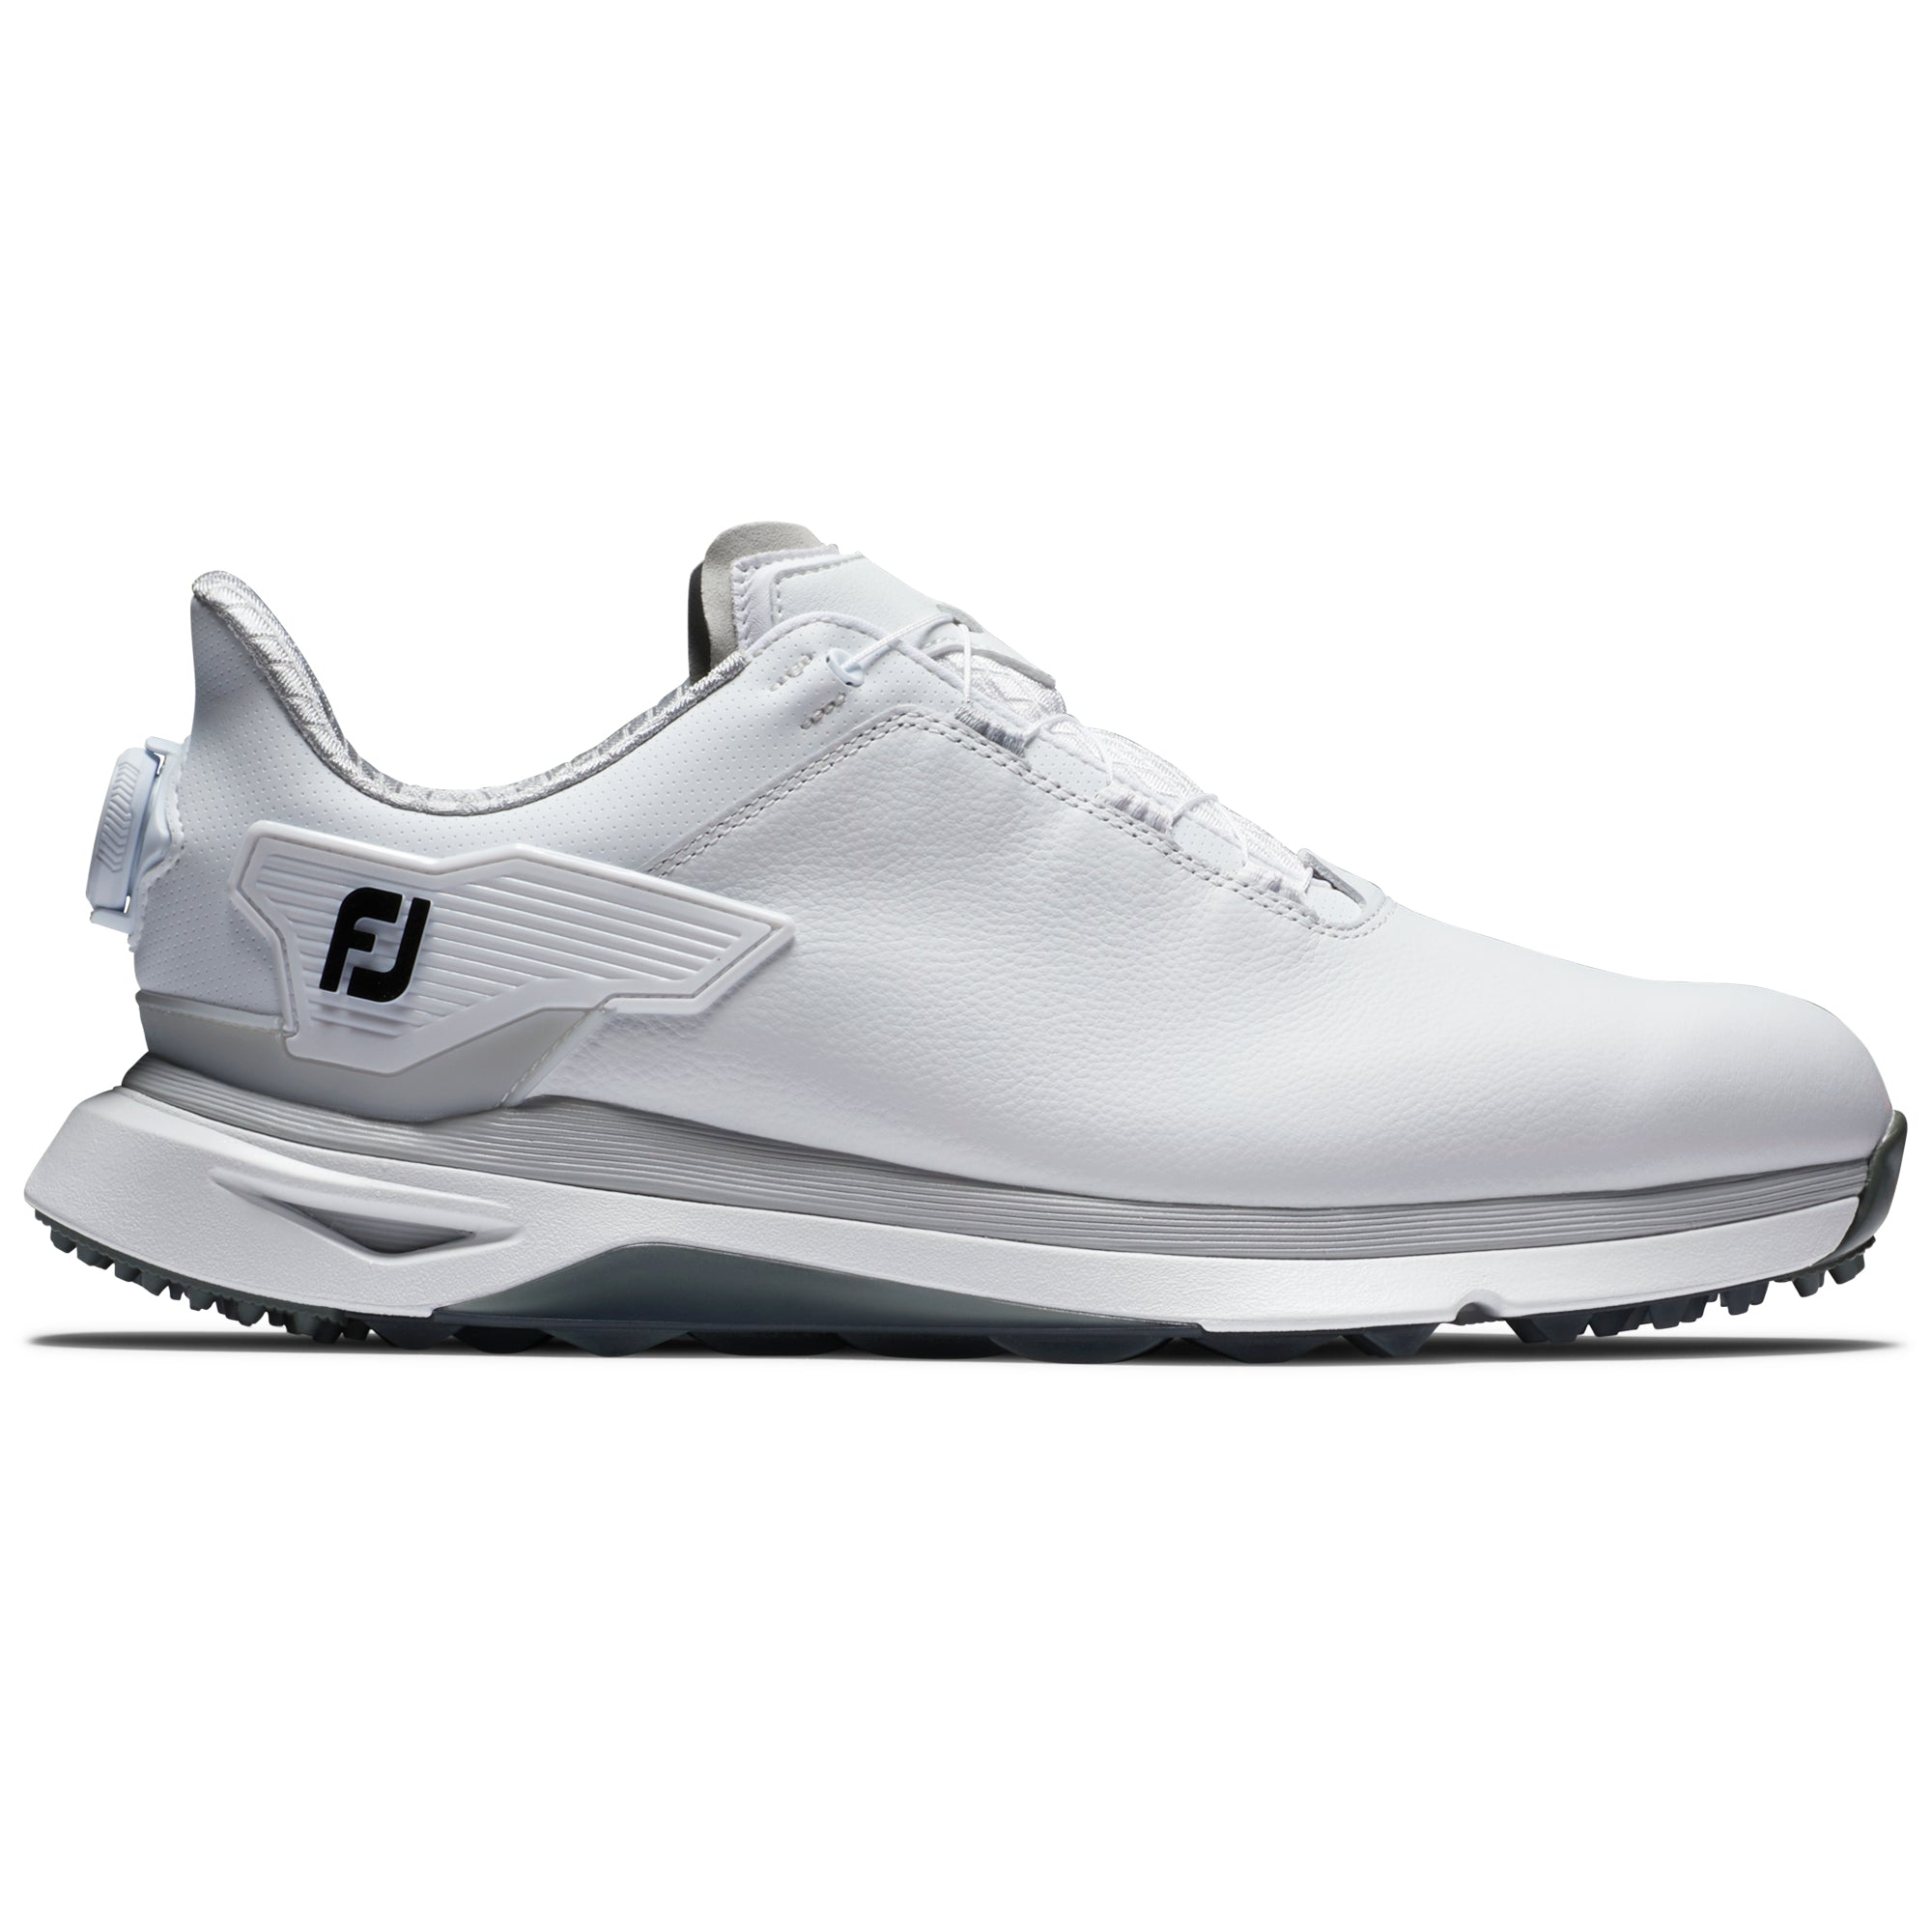 footjoy-pro-slx-boa-golf-shoes-56915-white-grey